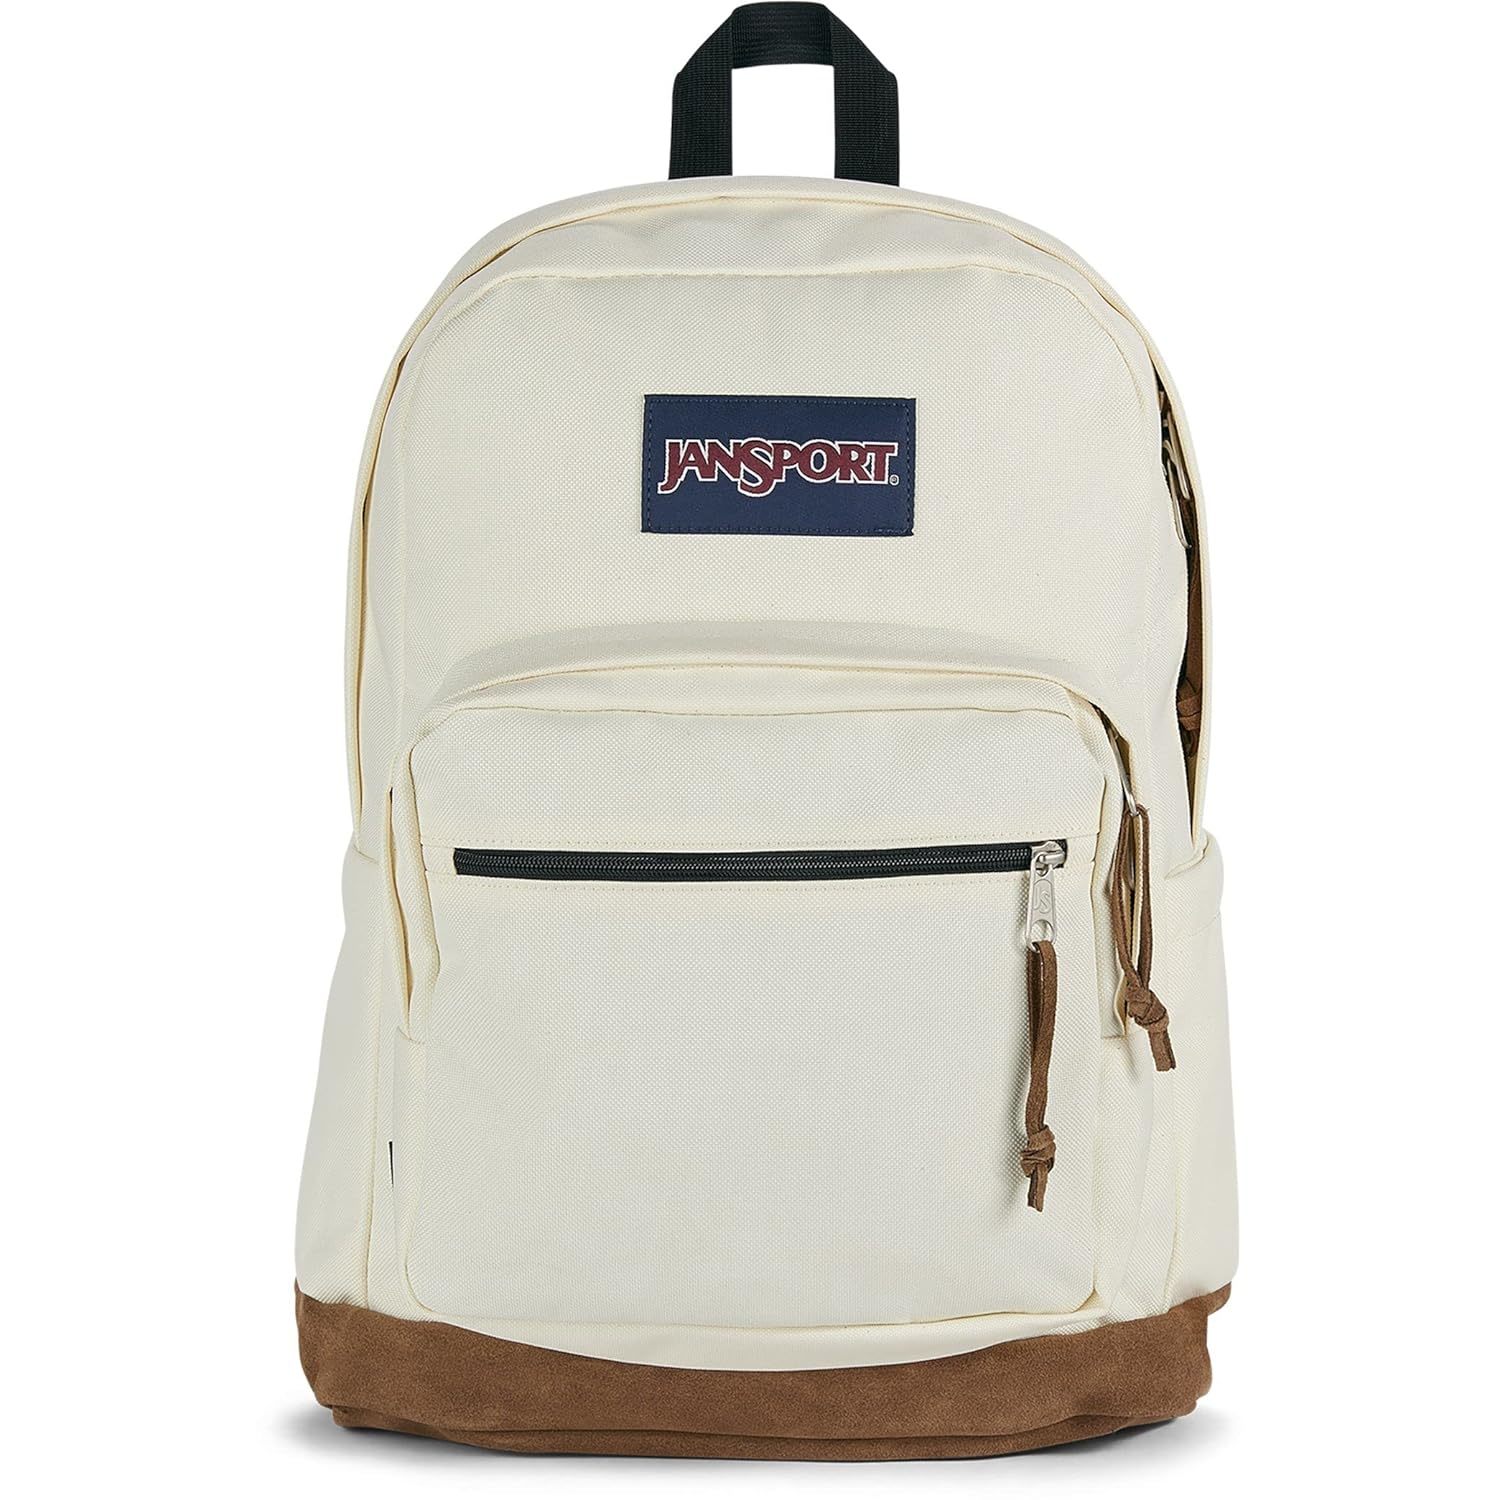 JanSport Right Pack Backpack - Travel, Work, or Laptop Bookbag with Leather Bott - $115.99